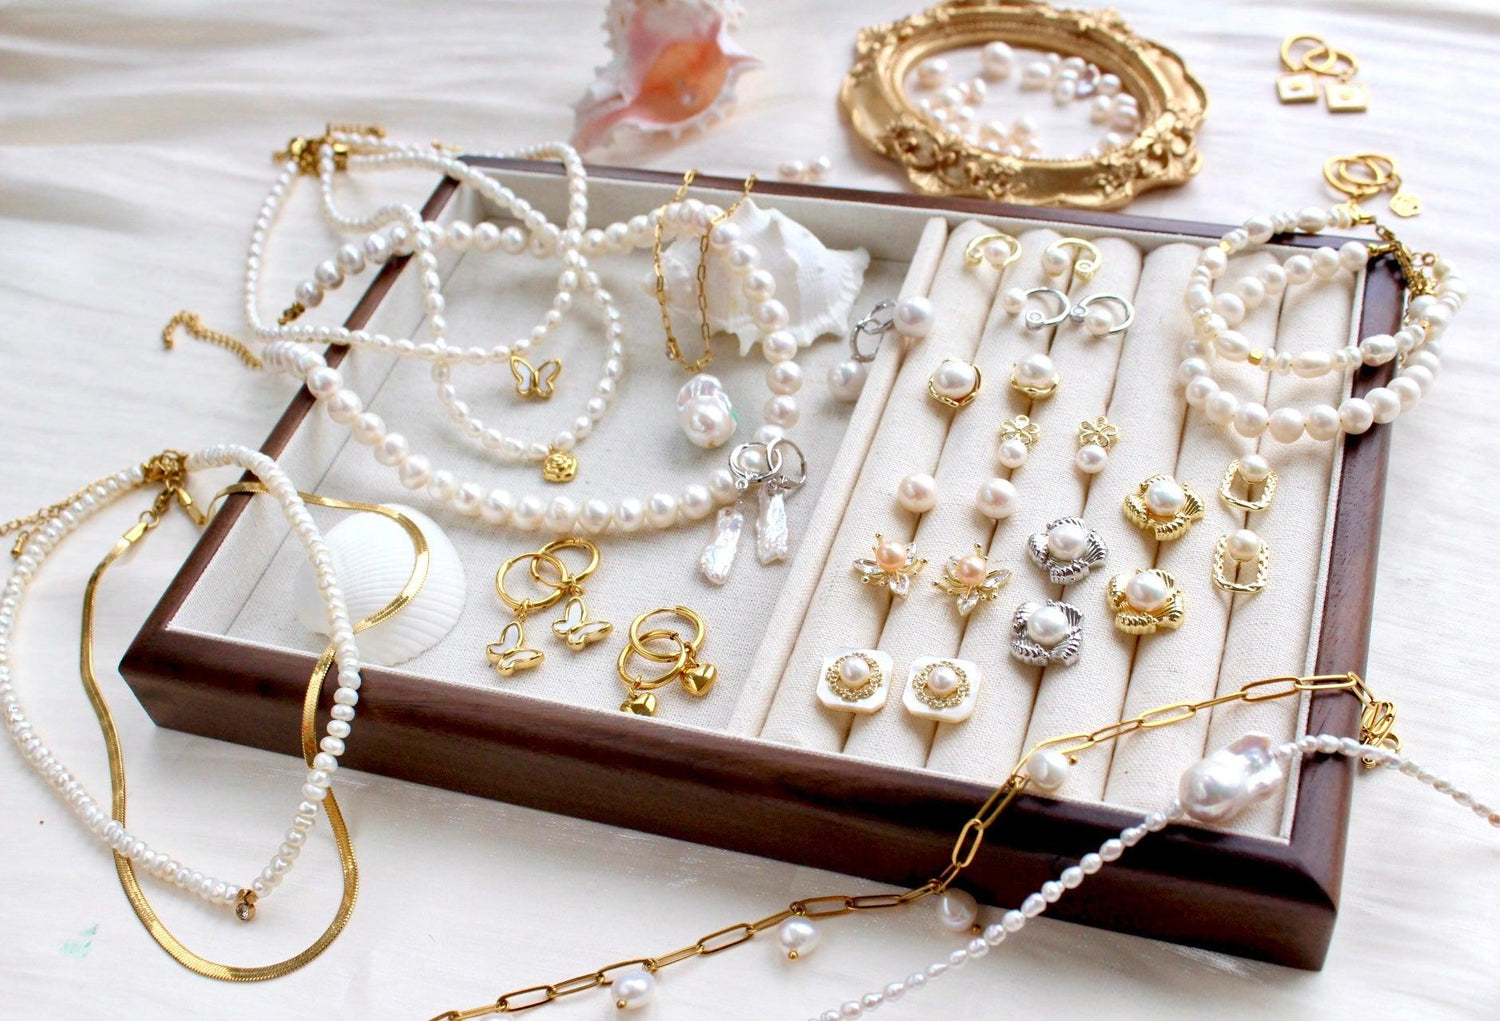 IMG_4615 - JK Jewelry & Accessories